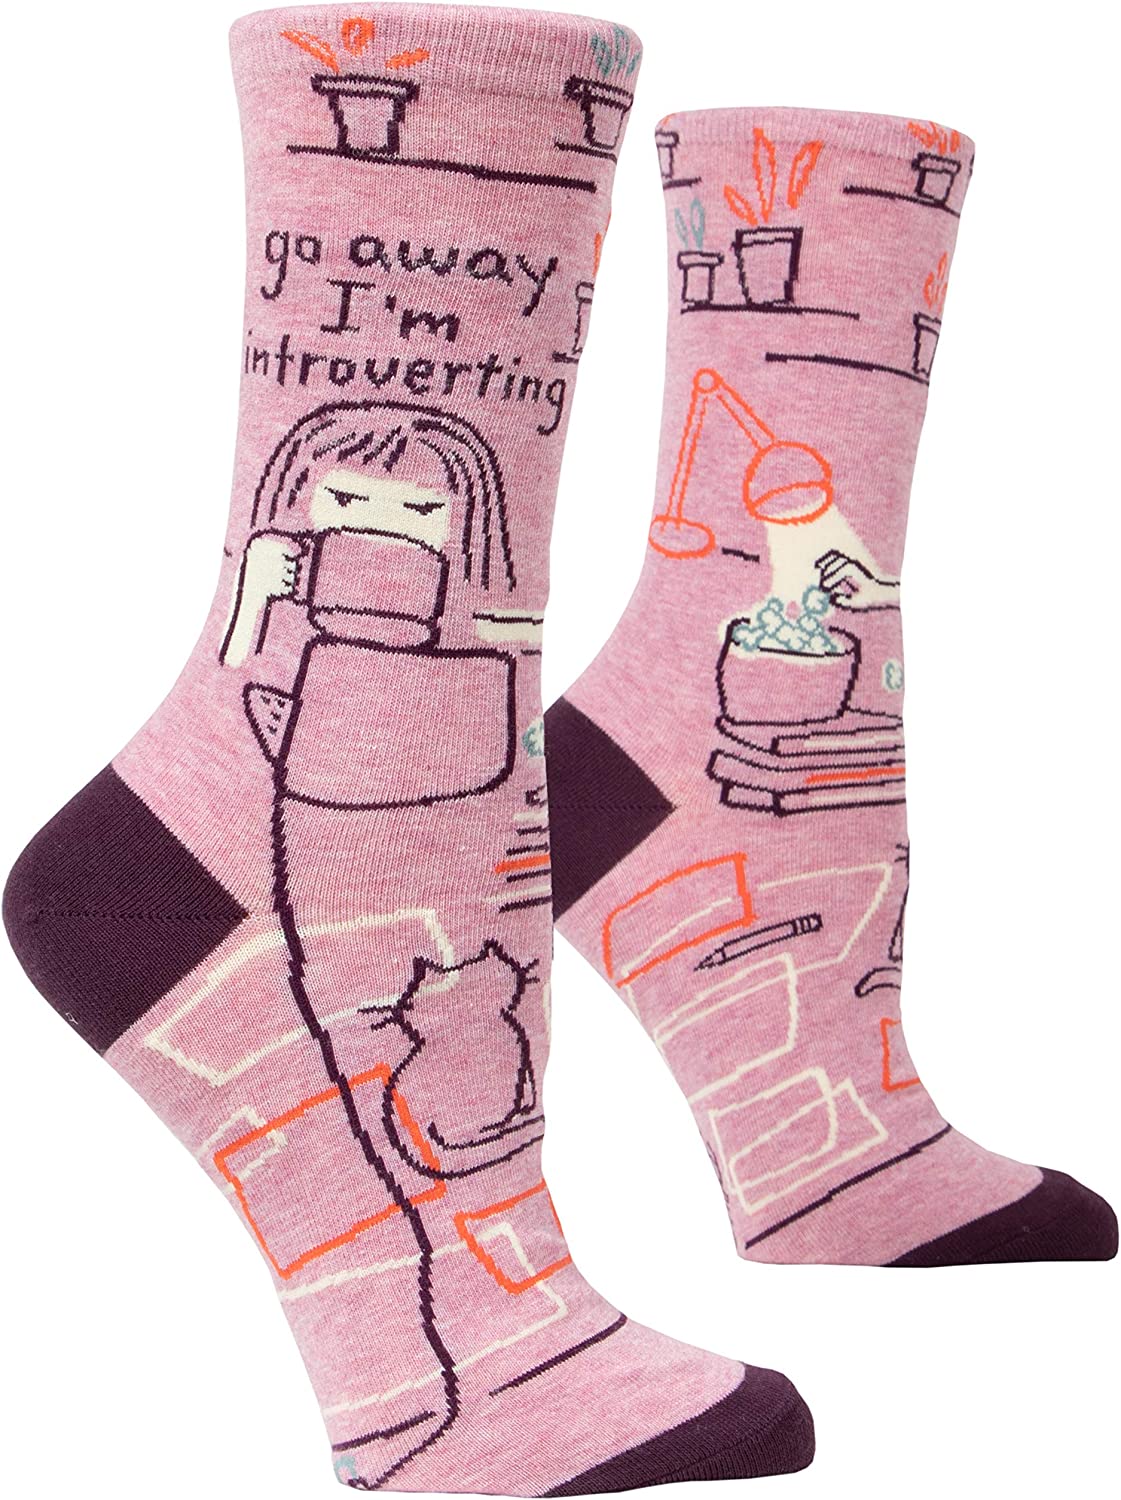 Witty Crew Socks